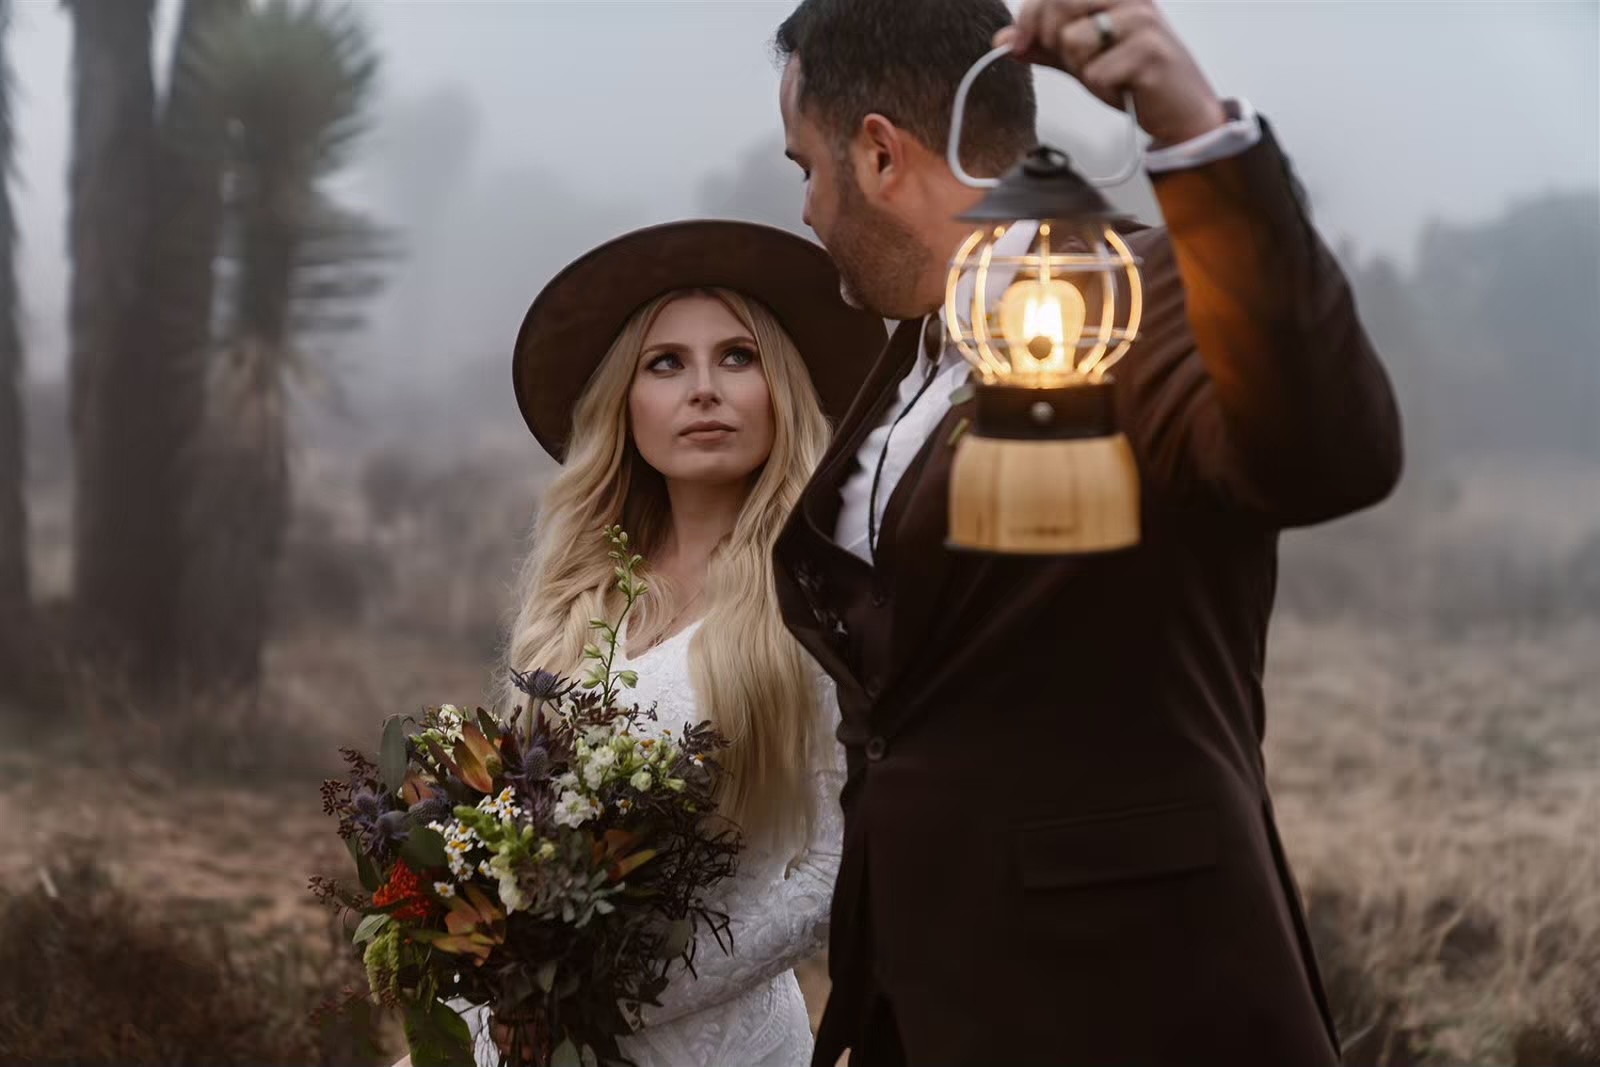 Bride and groom explore Joshua Tree with lanterns